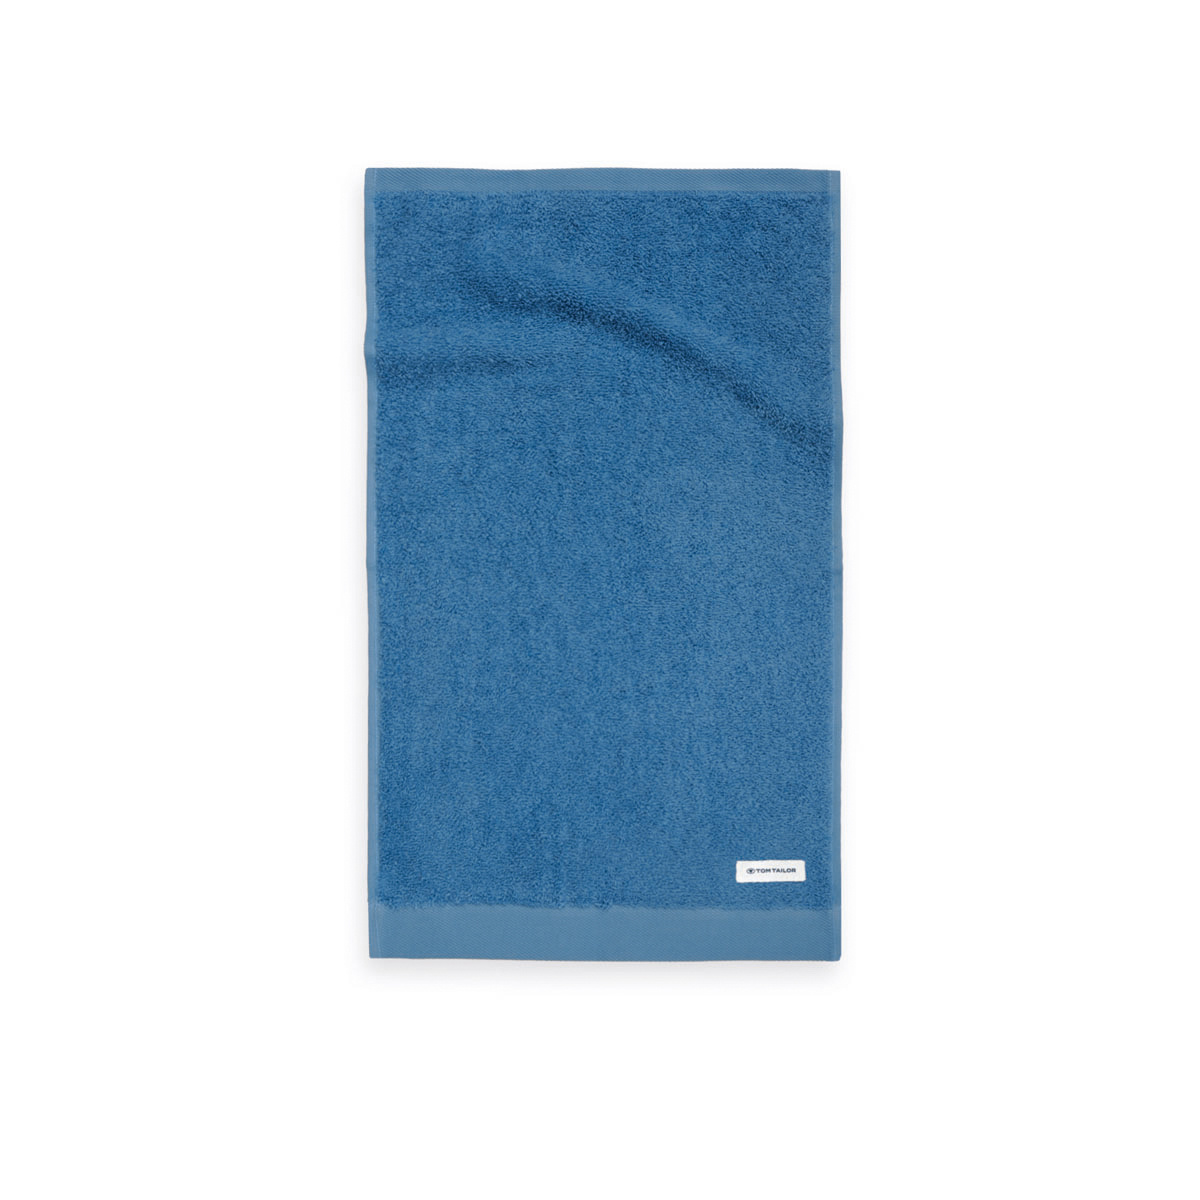 Tom Tailor Cool Blue törölköző, 30 x 50 cm, 6 db-os szett, 30 x 50 cm